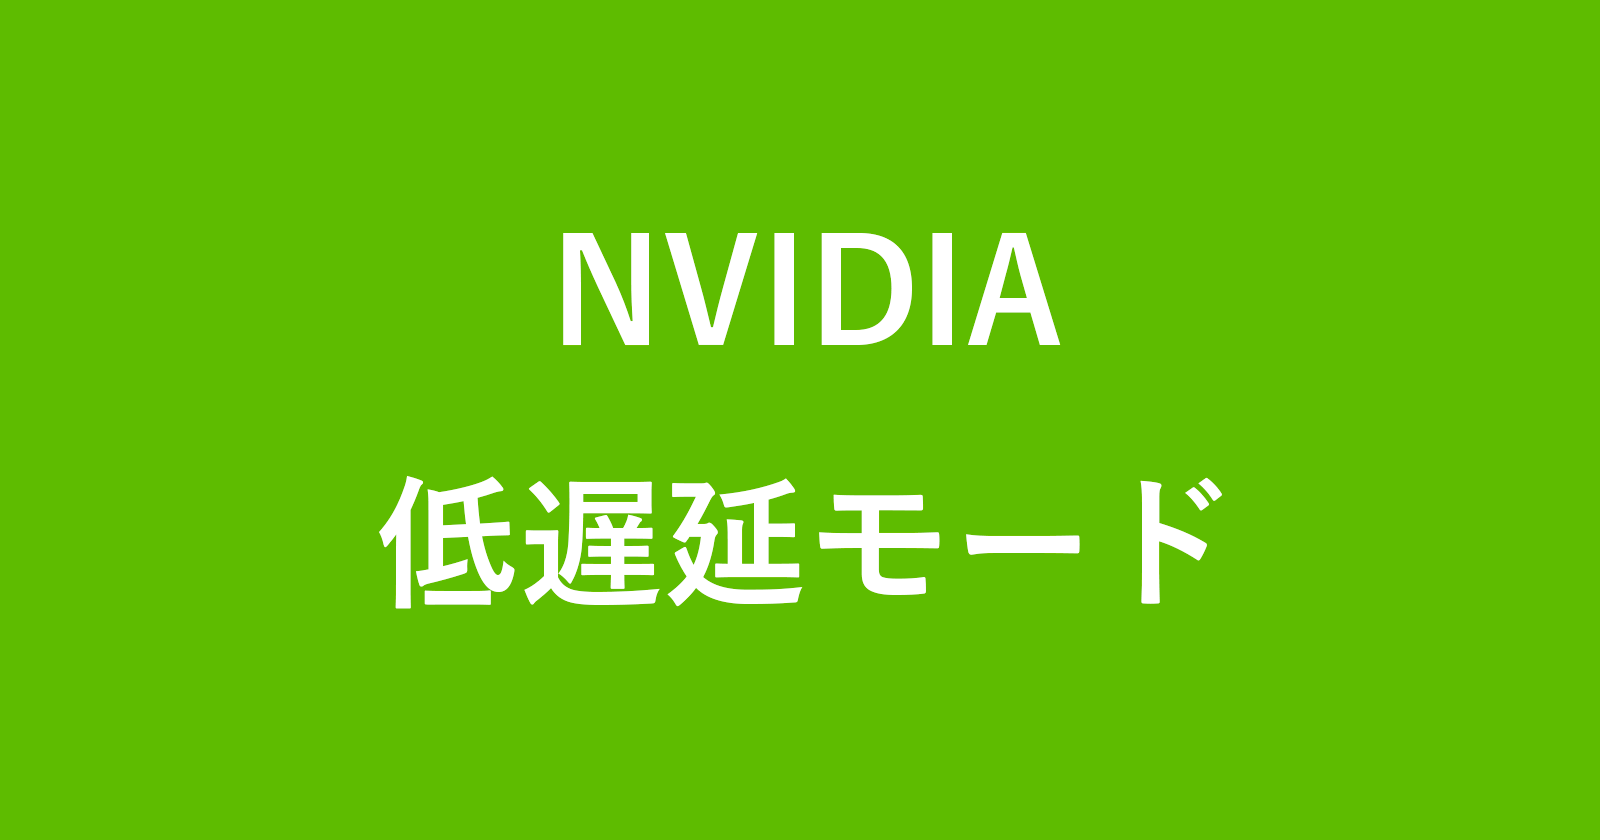 nvidia low latency mode